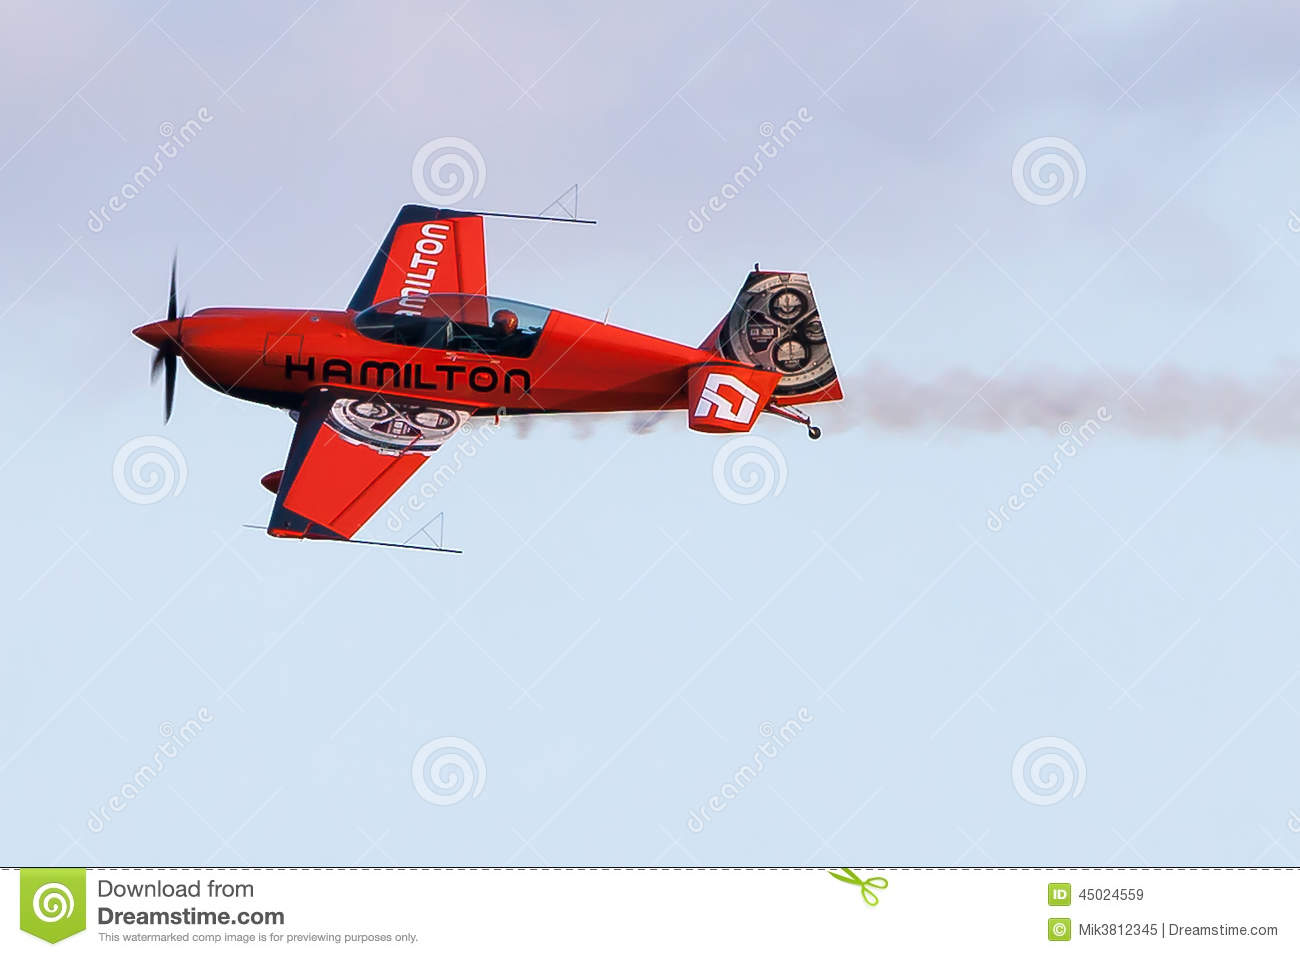 nicolas-ivanoff-hamilton-aircraft-edge-festa-al-cel-sky-party-air-show-september-45024559.jpg